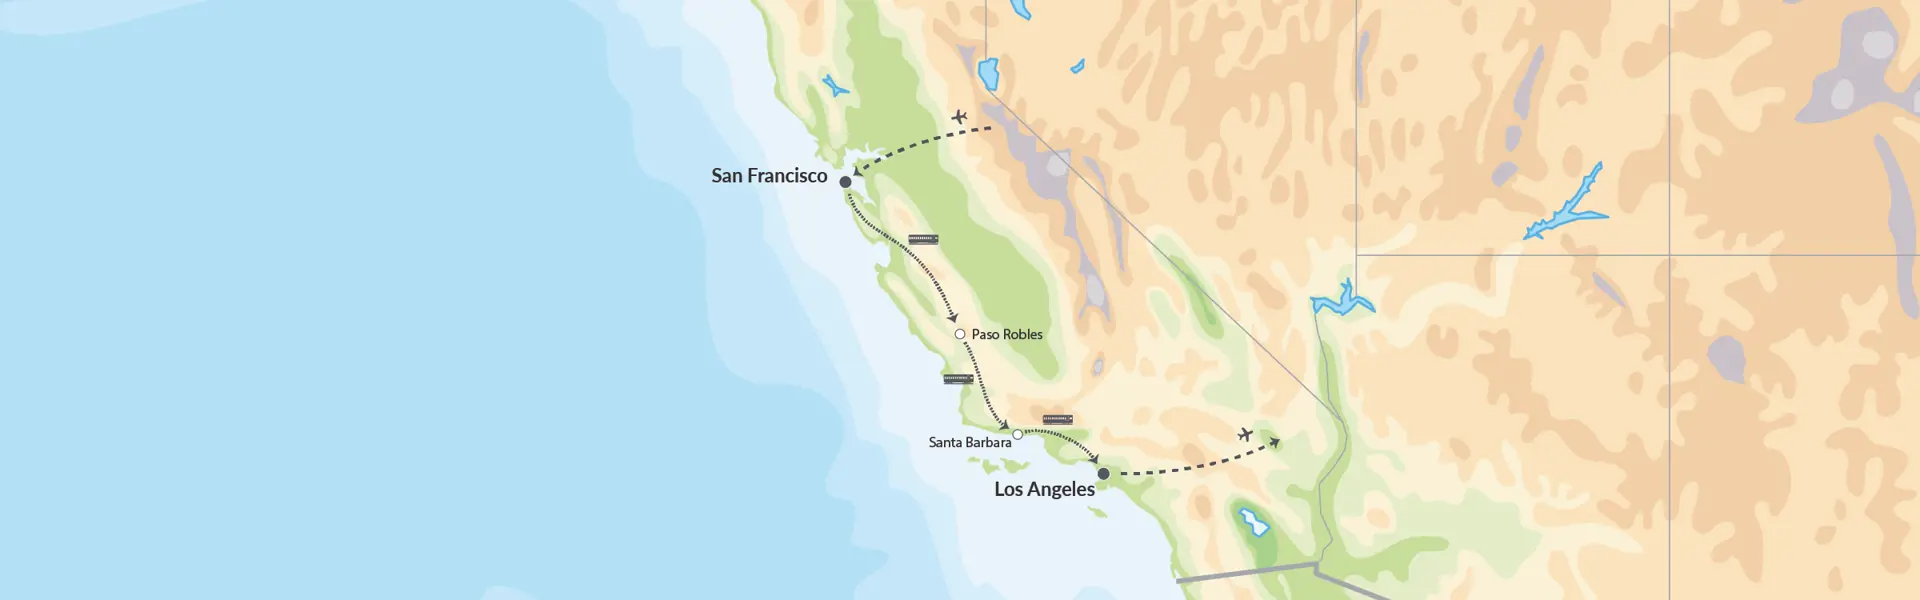 111522 Togrejse San Francisco Los Angeles Californien Map (1)